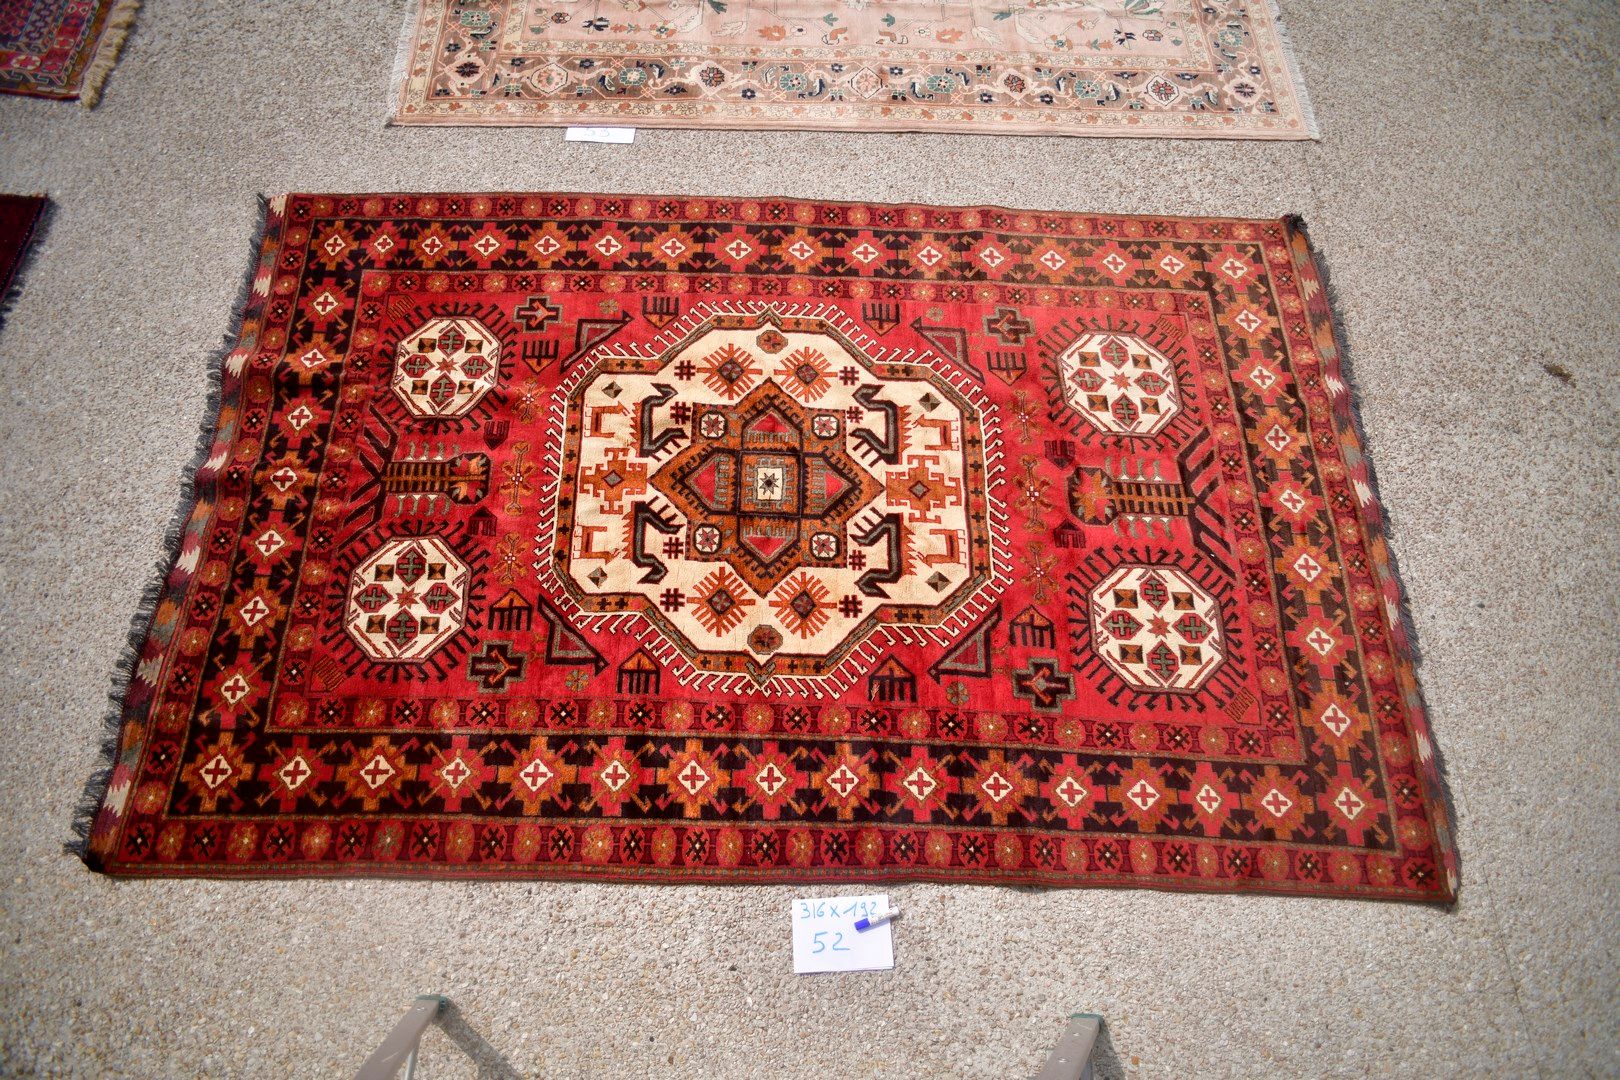 Null 阿富汗土库曼人，1980年。

羊毛基础上的羊毛丝绒。

樱桃色背景上的装饰让人想起高加索地区的哈萨克地毯。

状况良好。 

316x192厘米